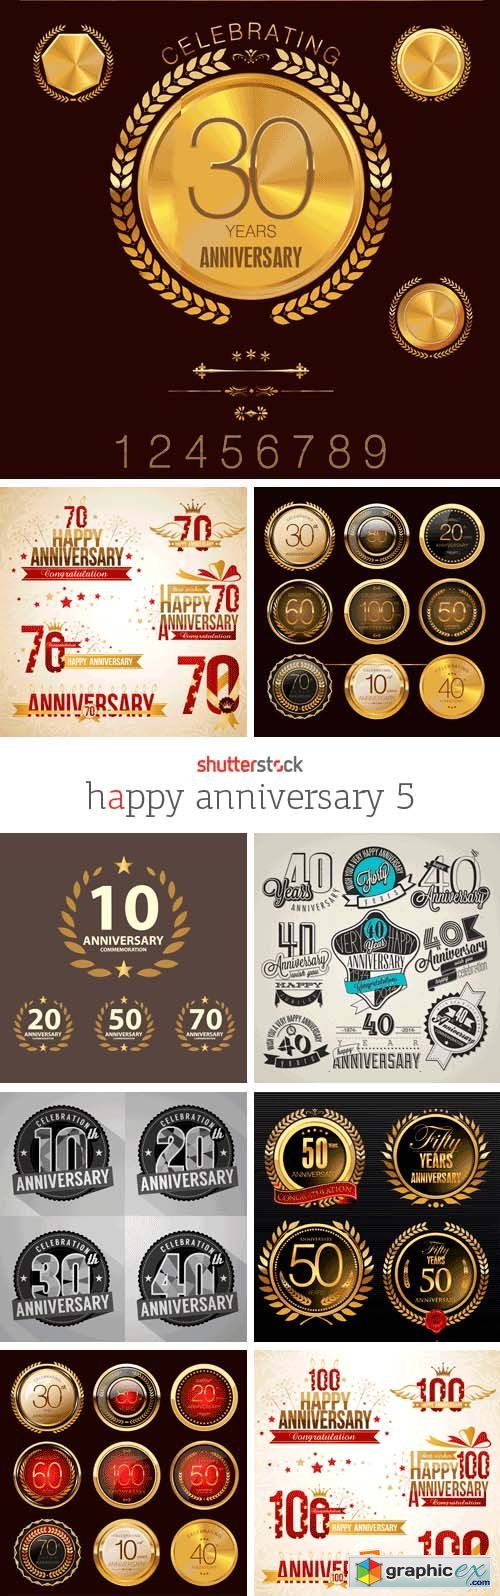 Amazing SS - Happy Anniversary 5, 25xEPS